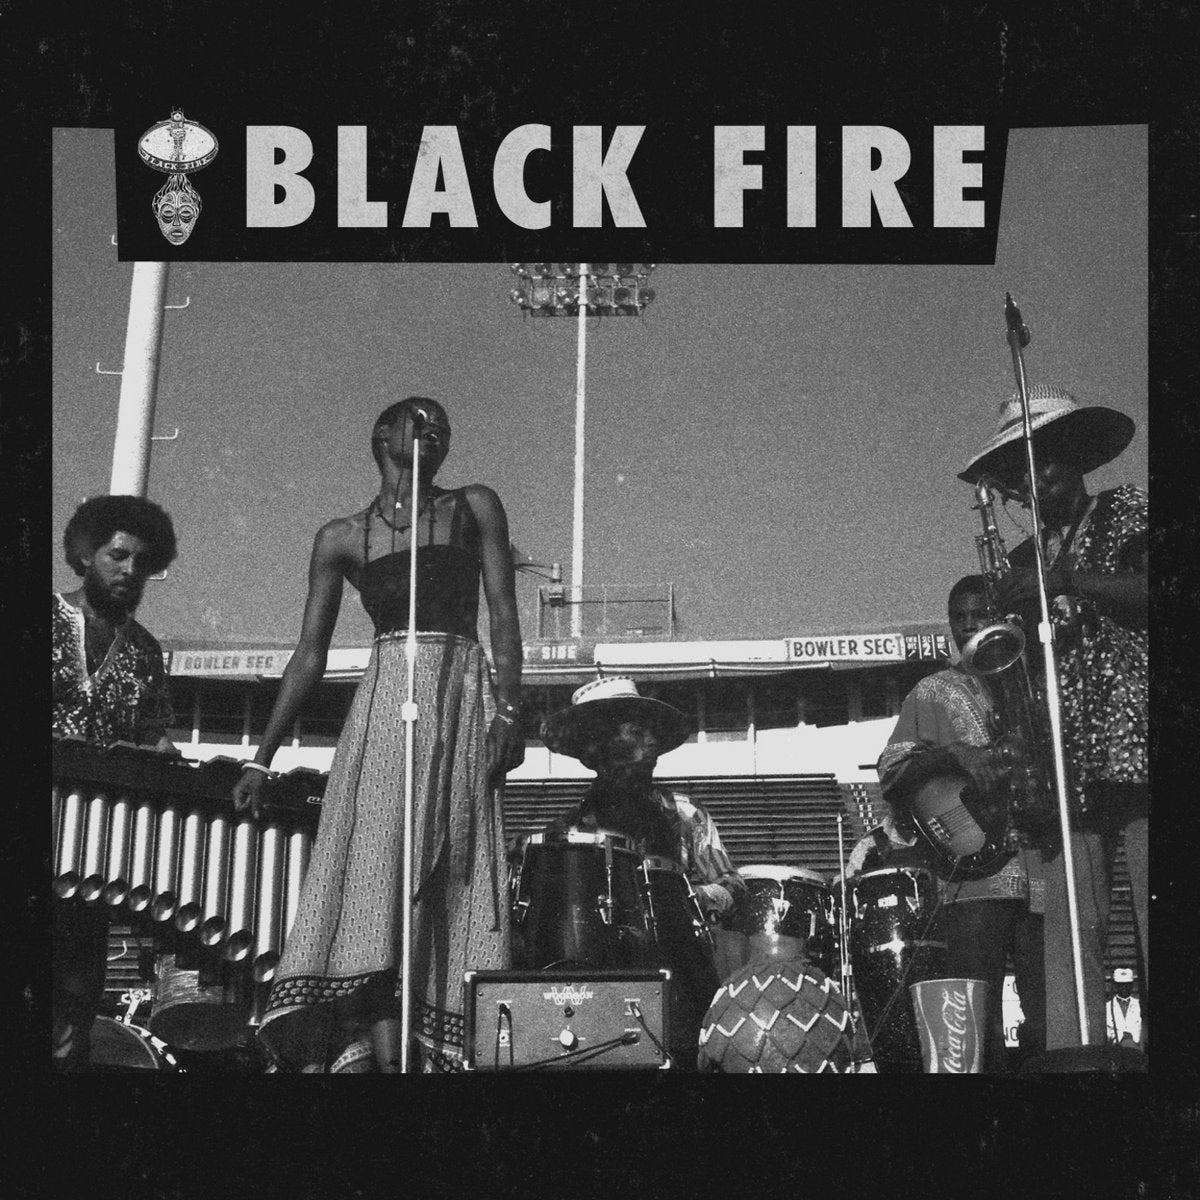 VARIOUS - Soul Love Now: The Black Fire Records Story 1975-1993 - LP - Vinyl